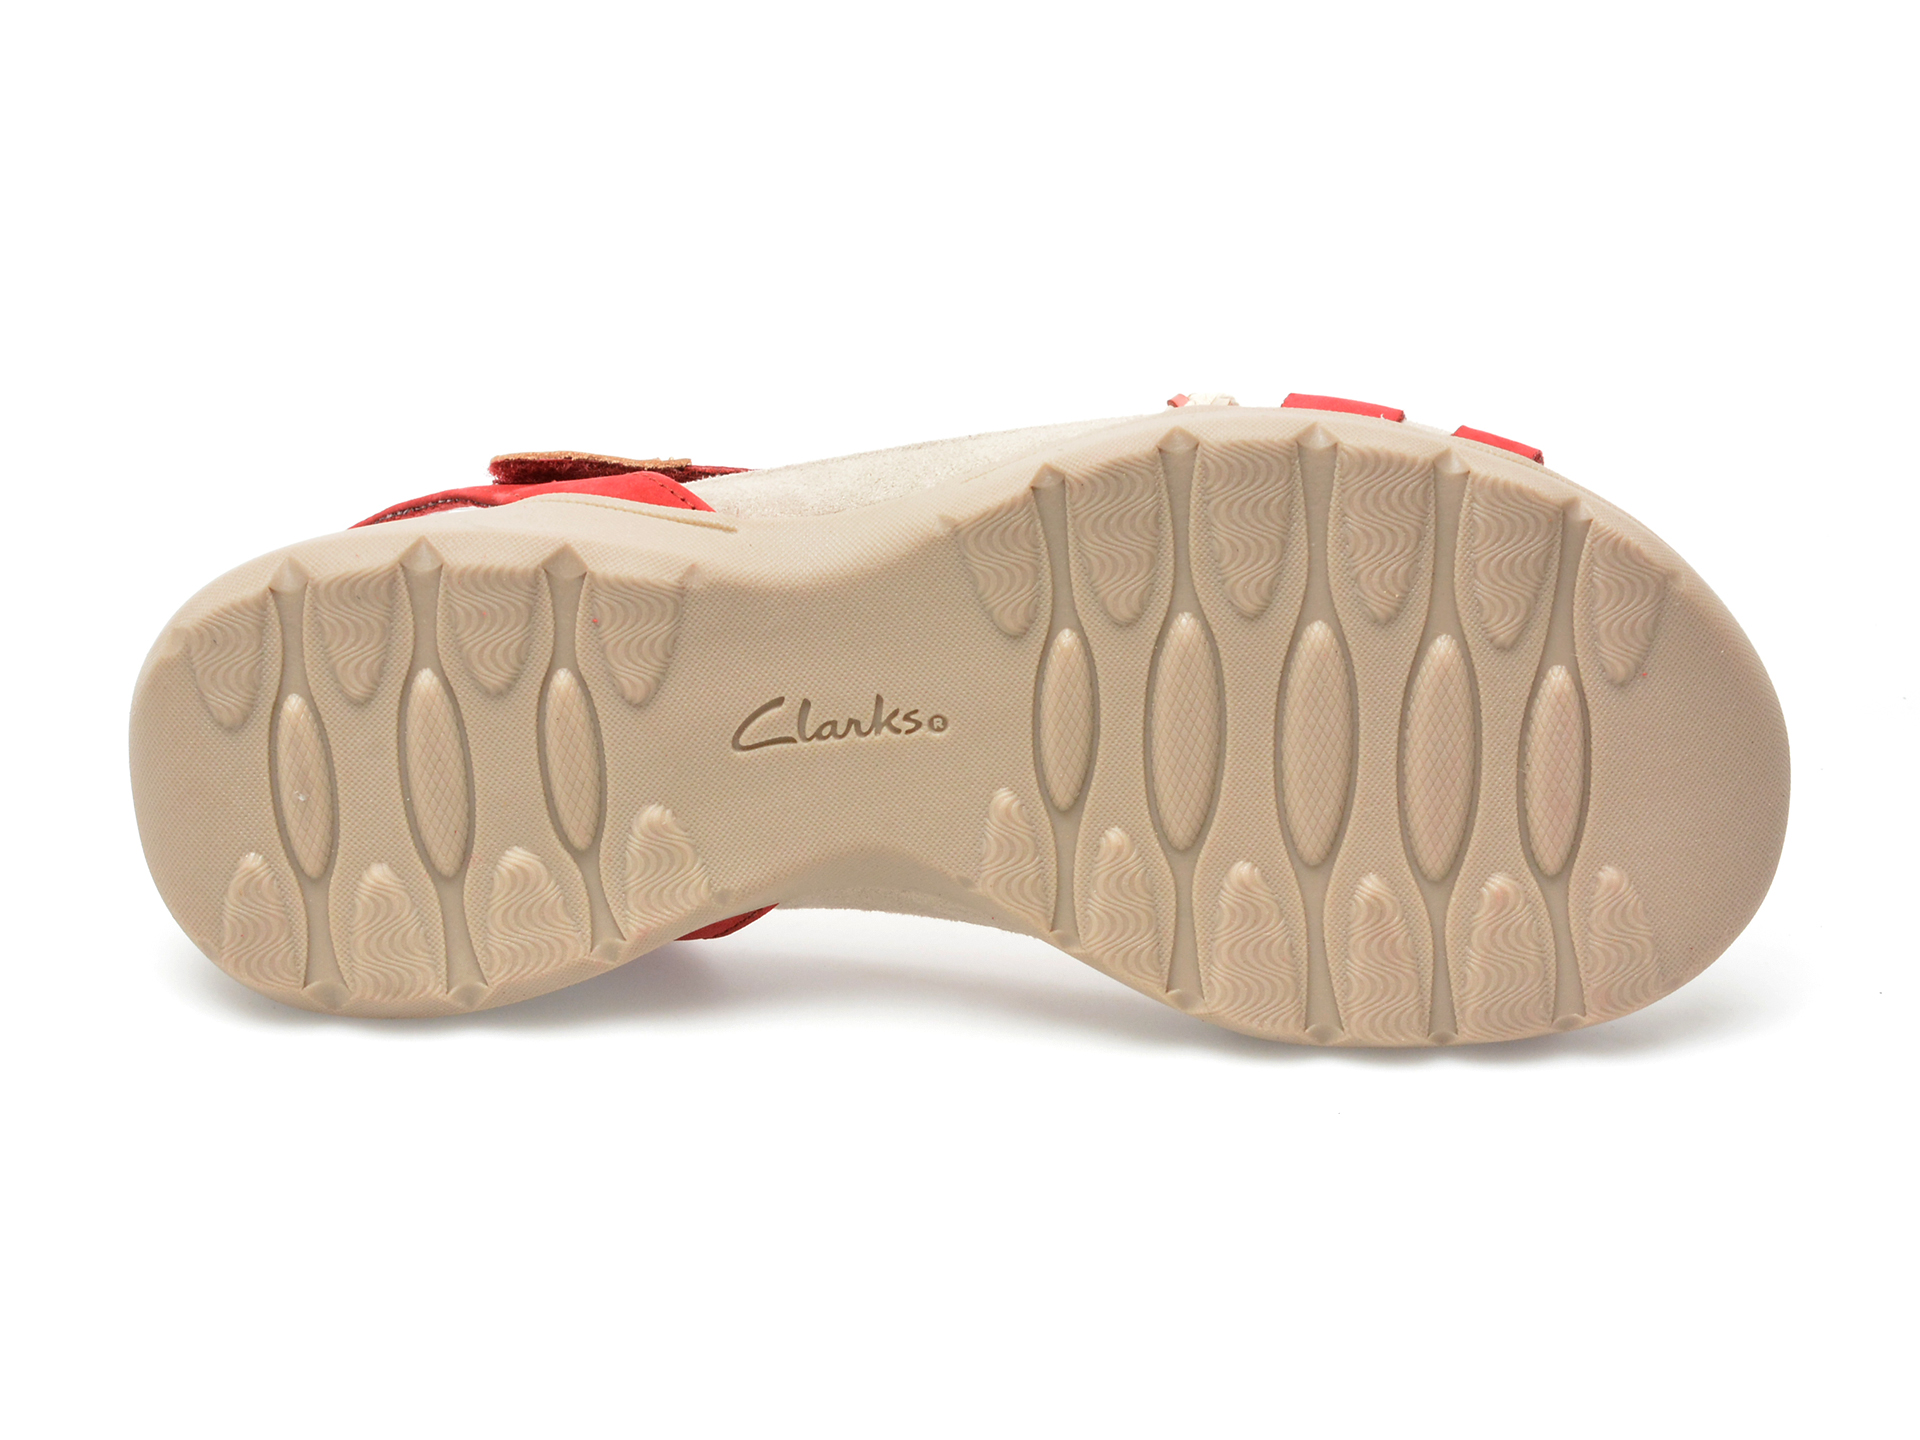 Sandale CLARKS rosii, AMANDA TEALITE 0912, din nabuc